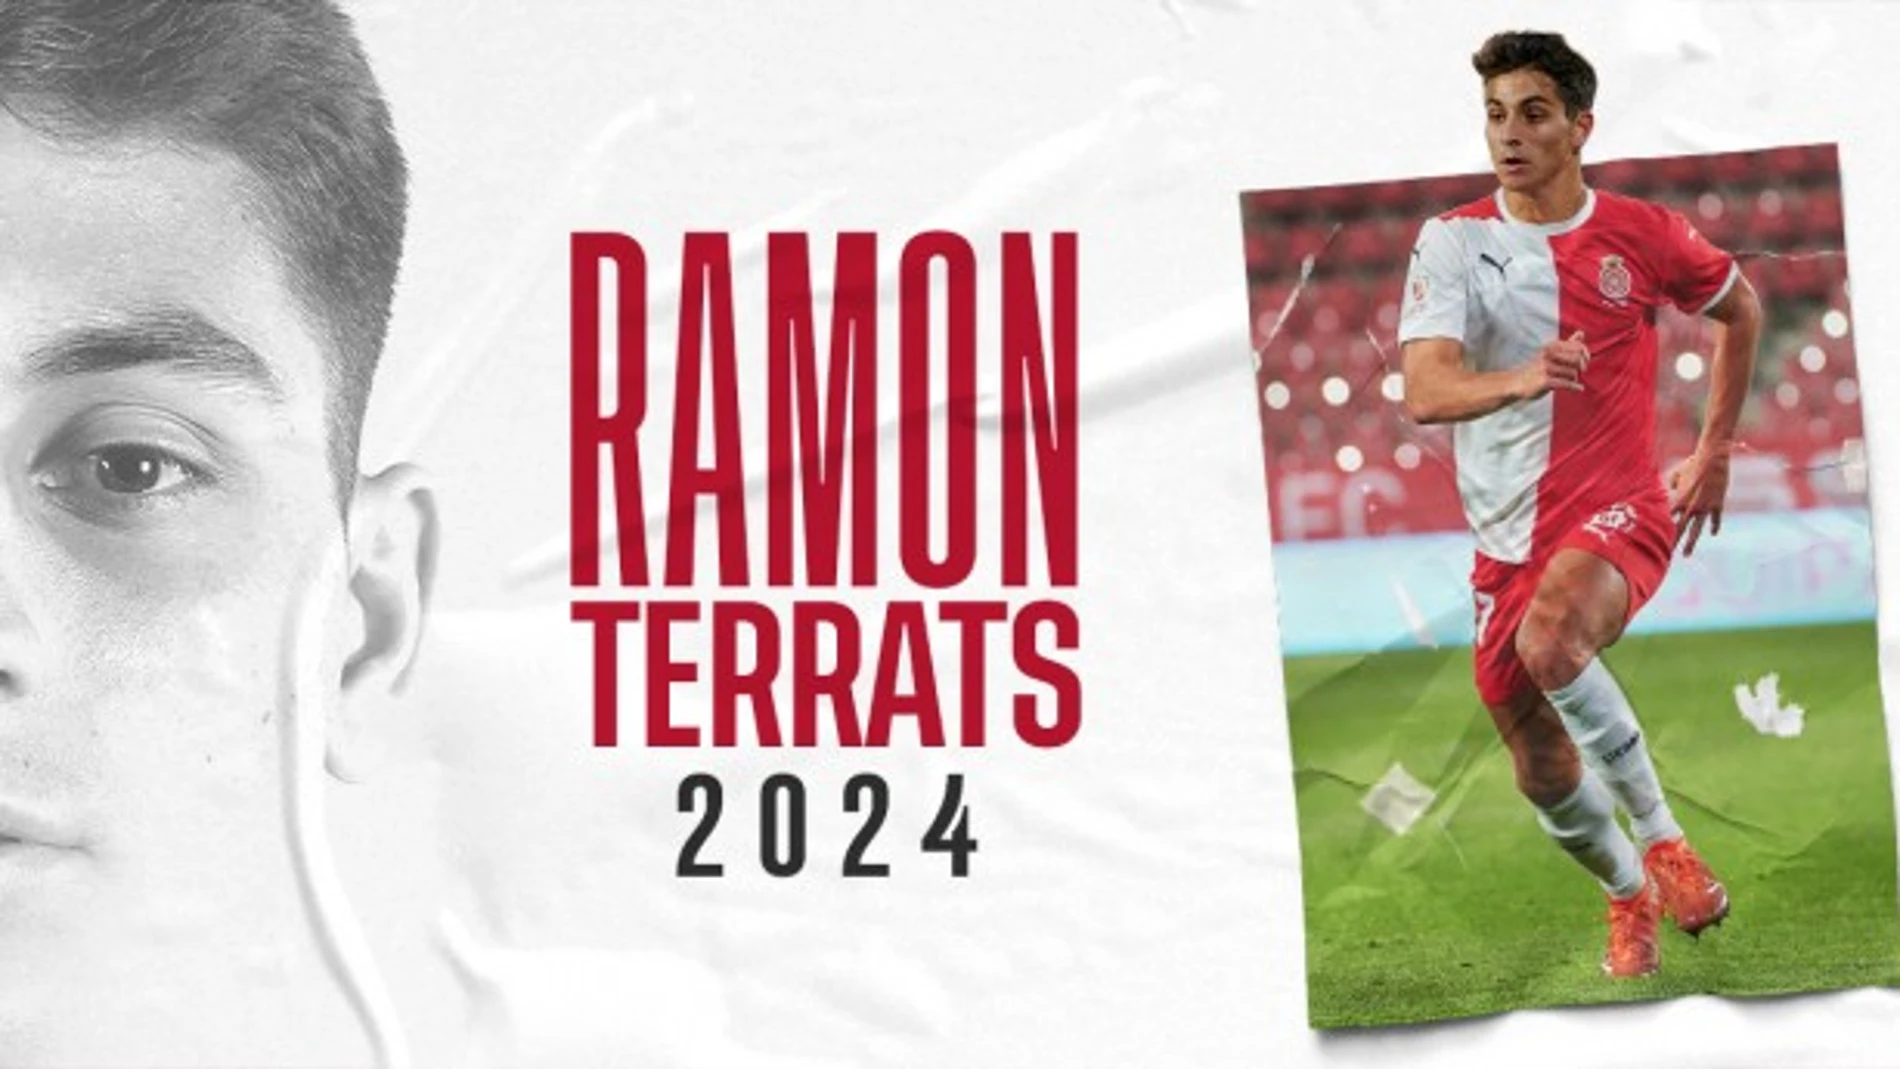 Ramon Terrats